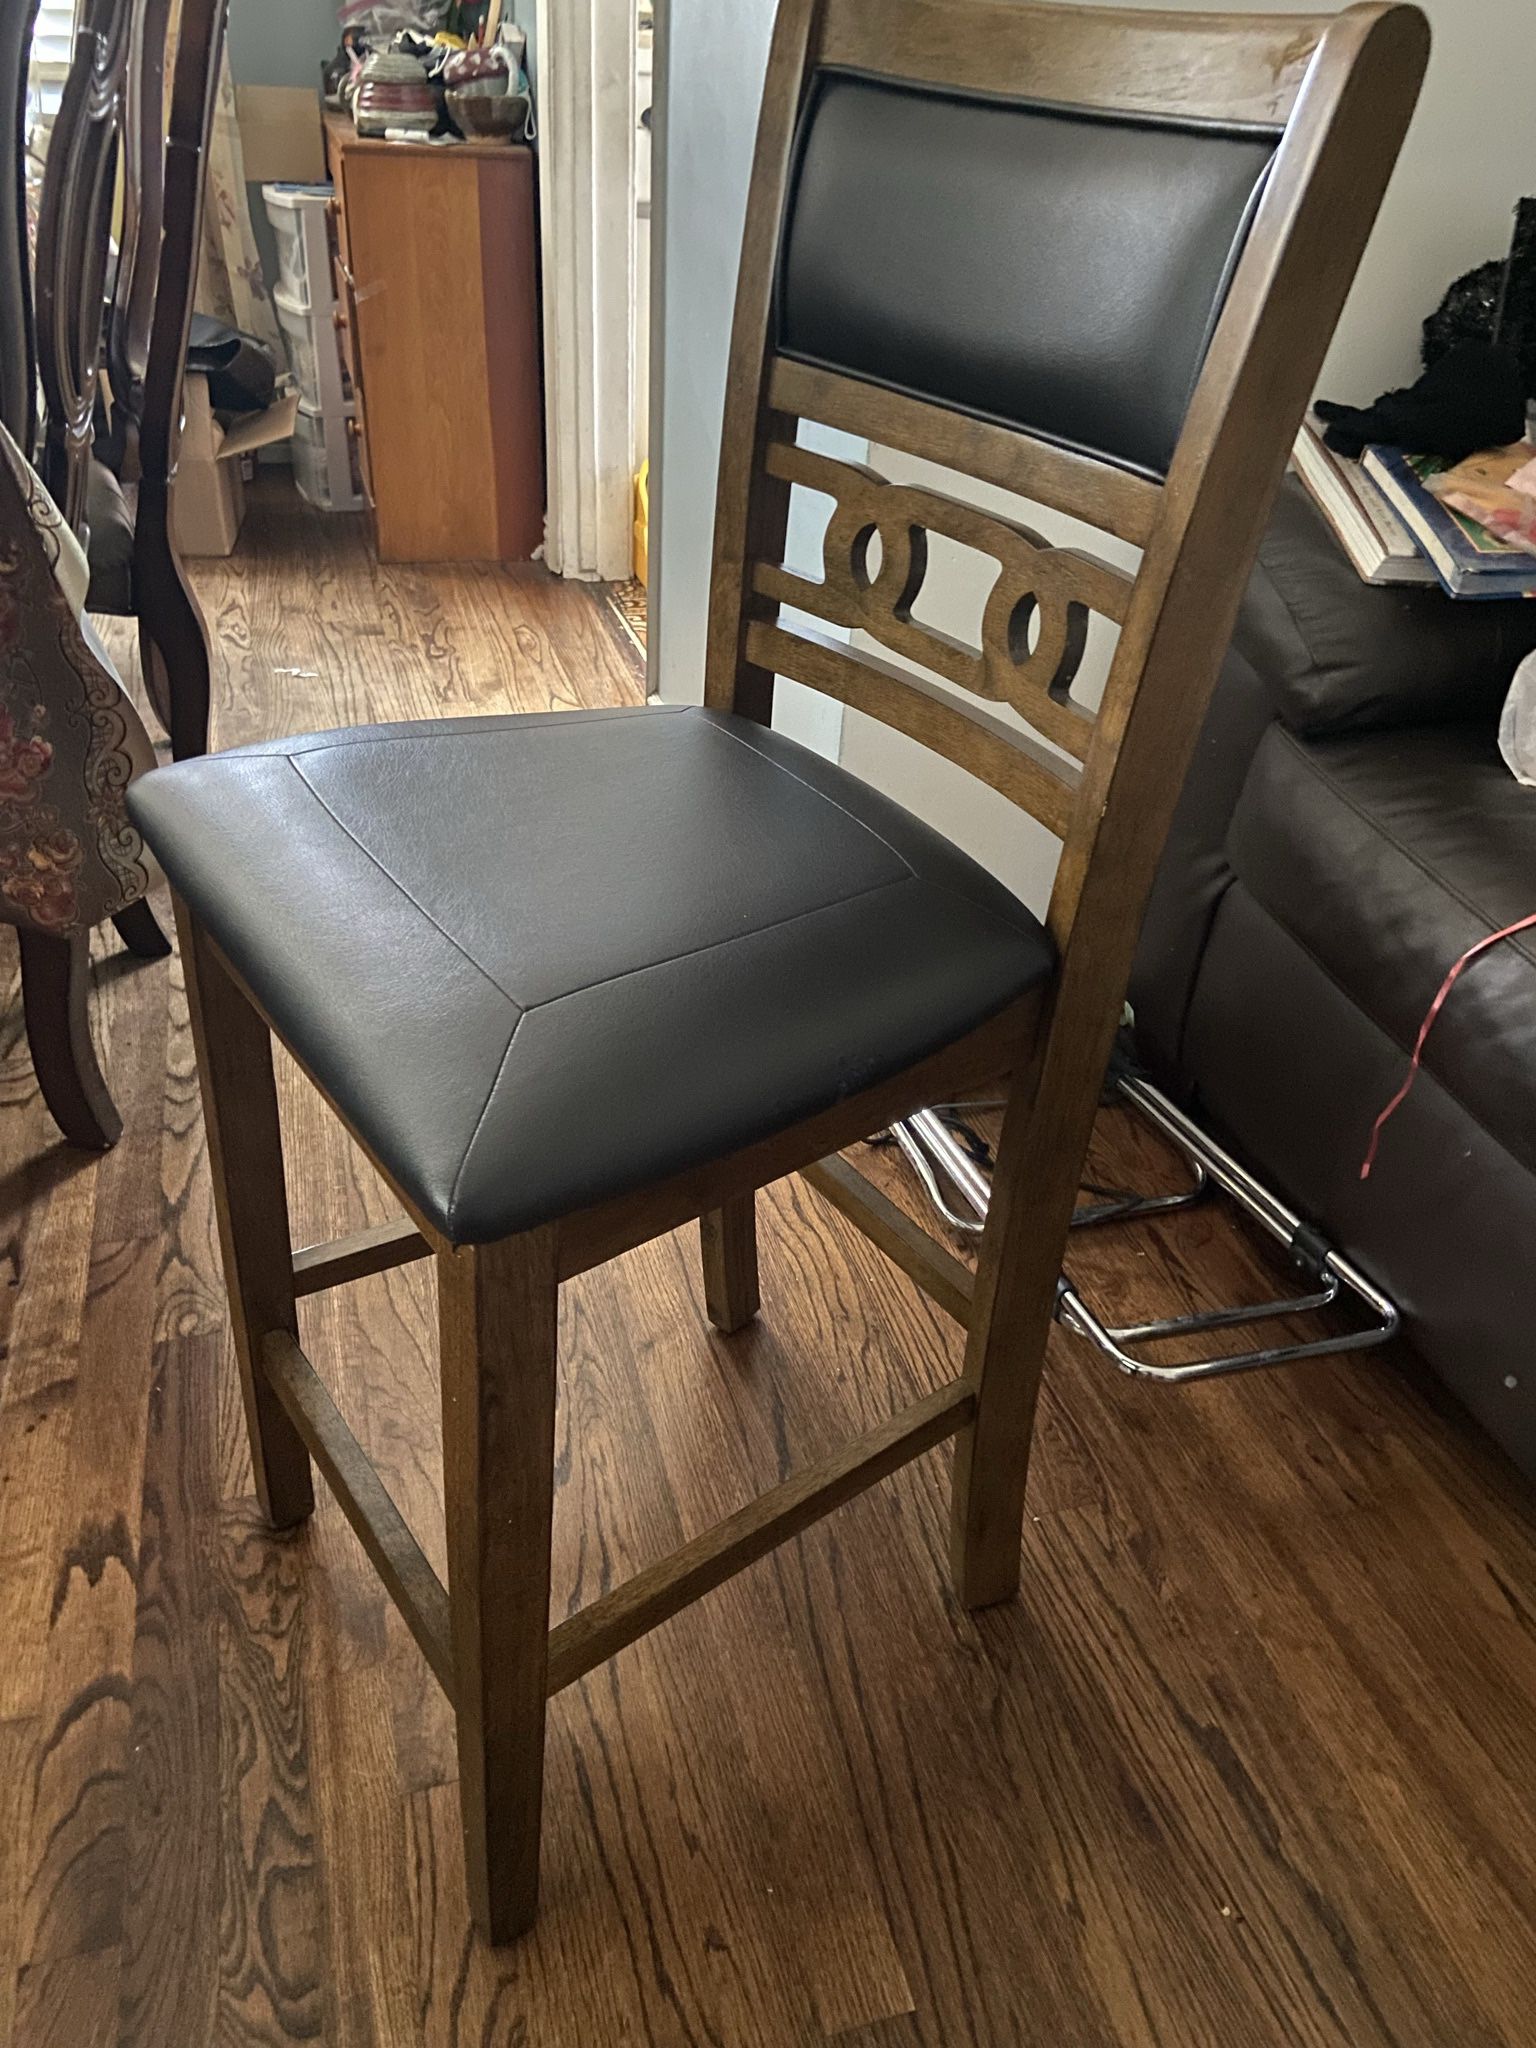 Stool Chair 